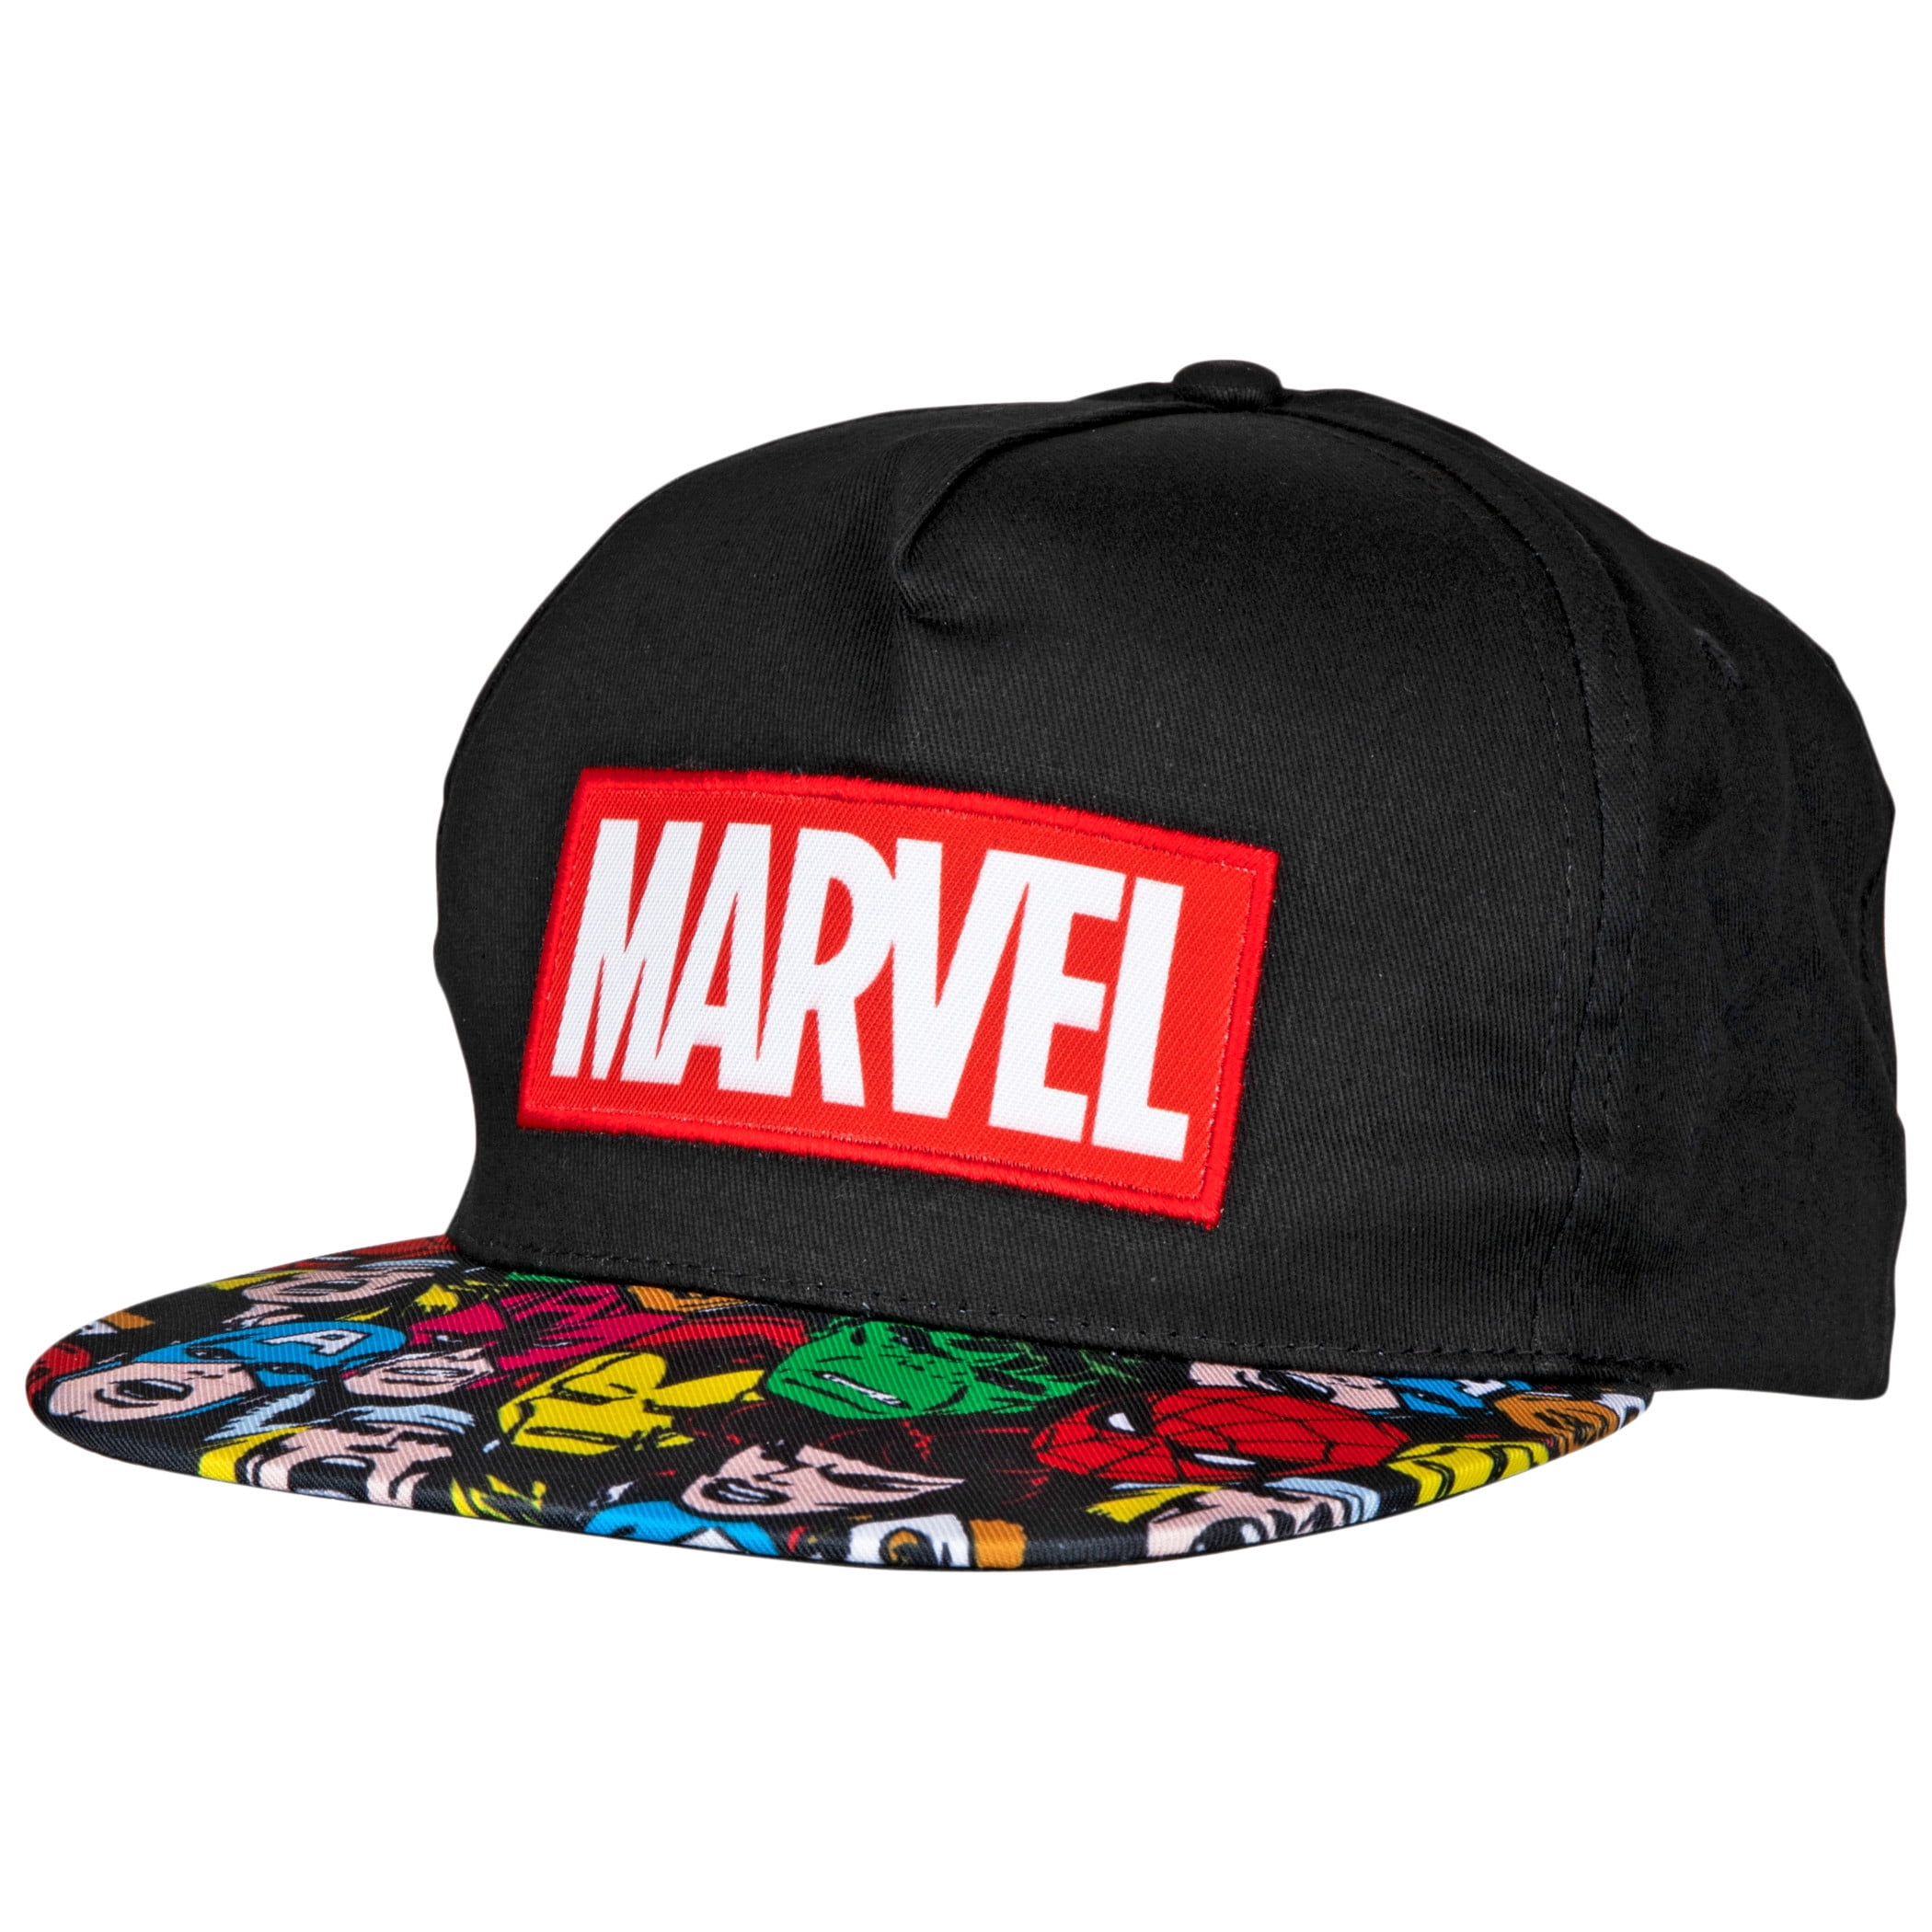 Avengers curandero caps Marvel cap SnapBack tapas gorras gorros Hats gorras 